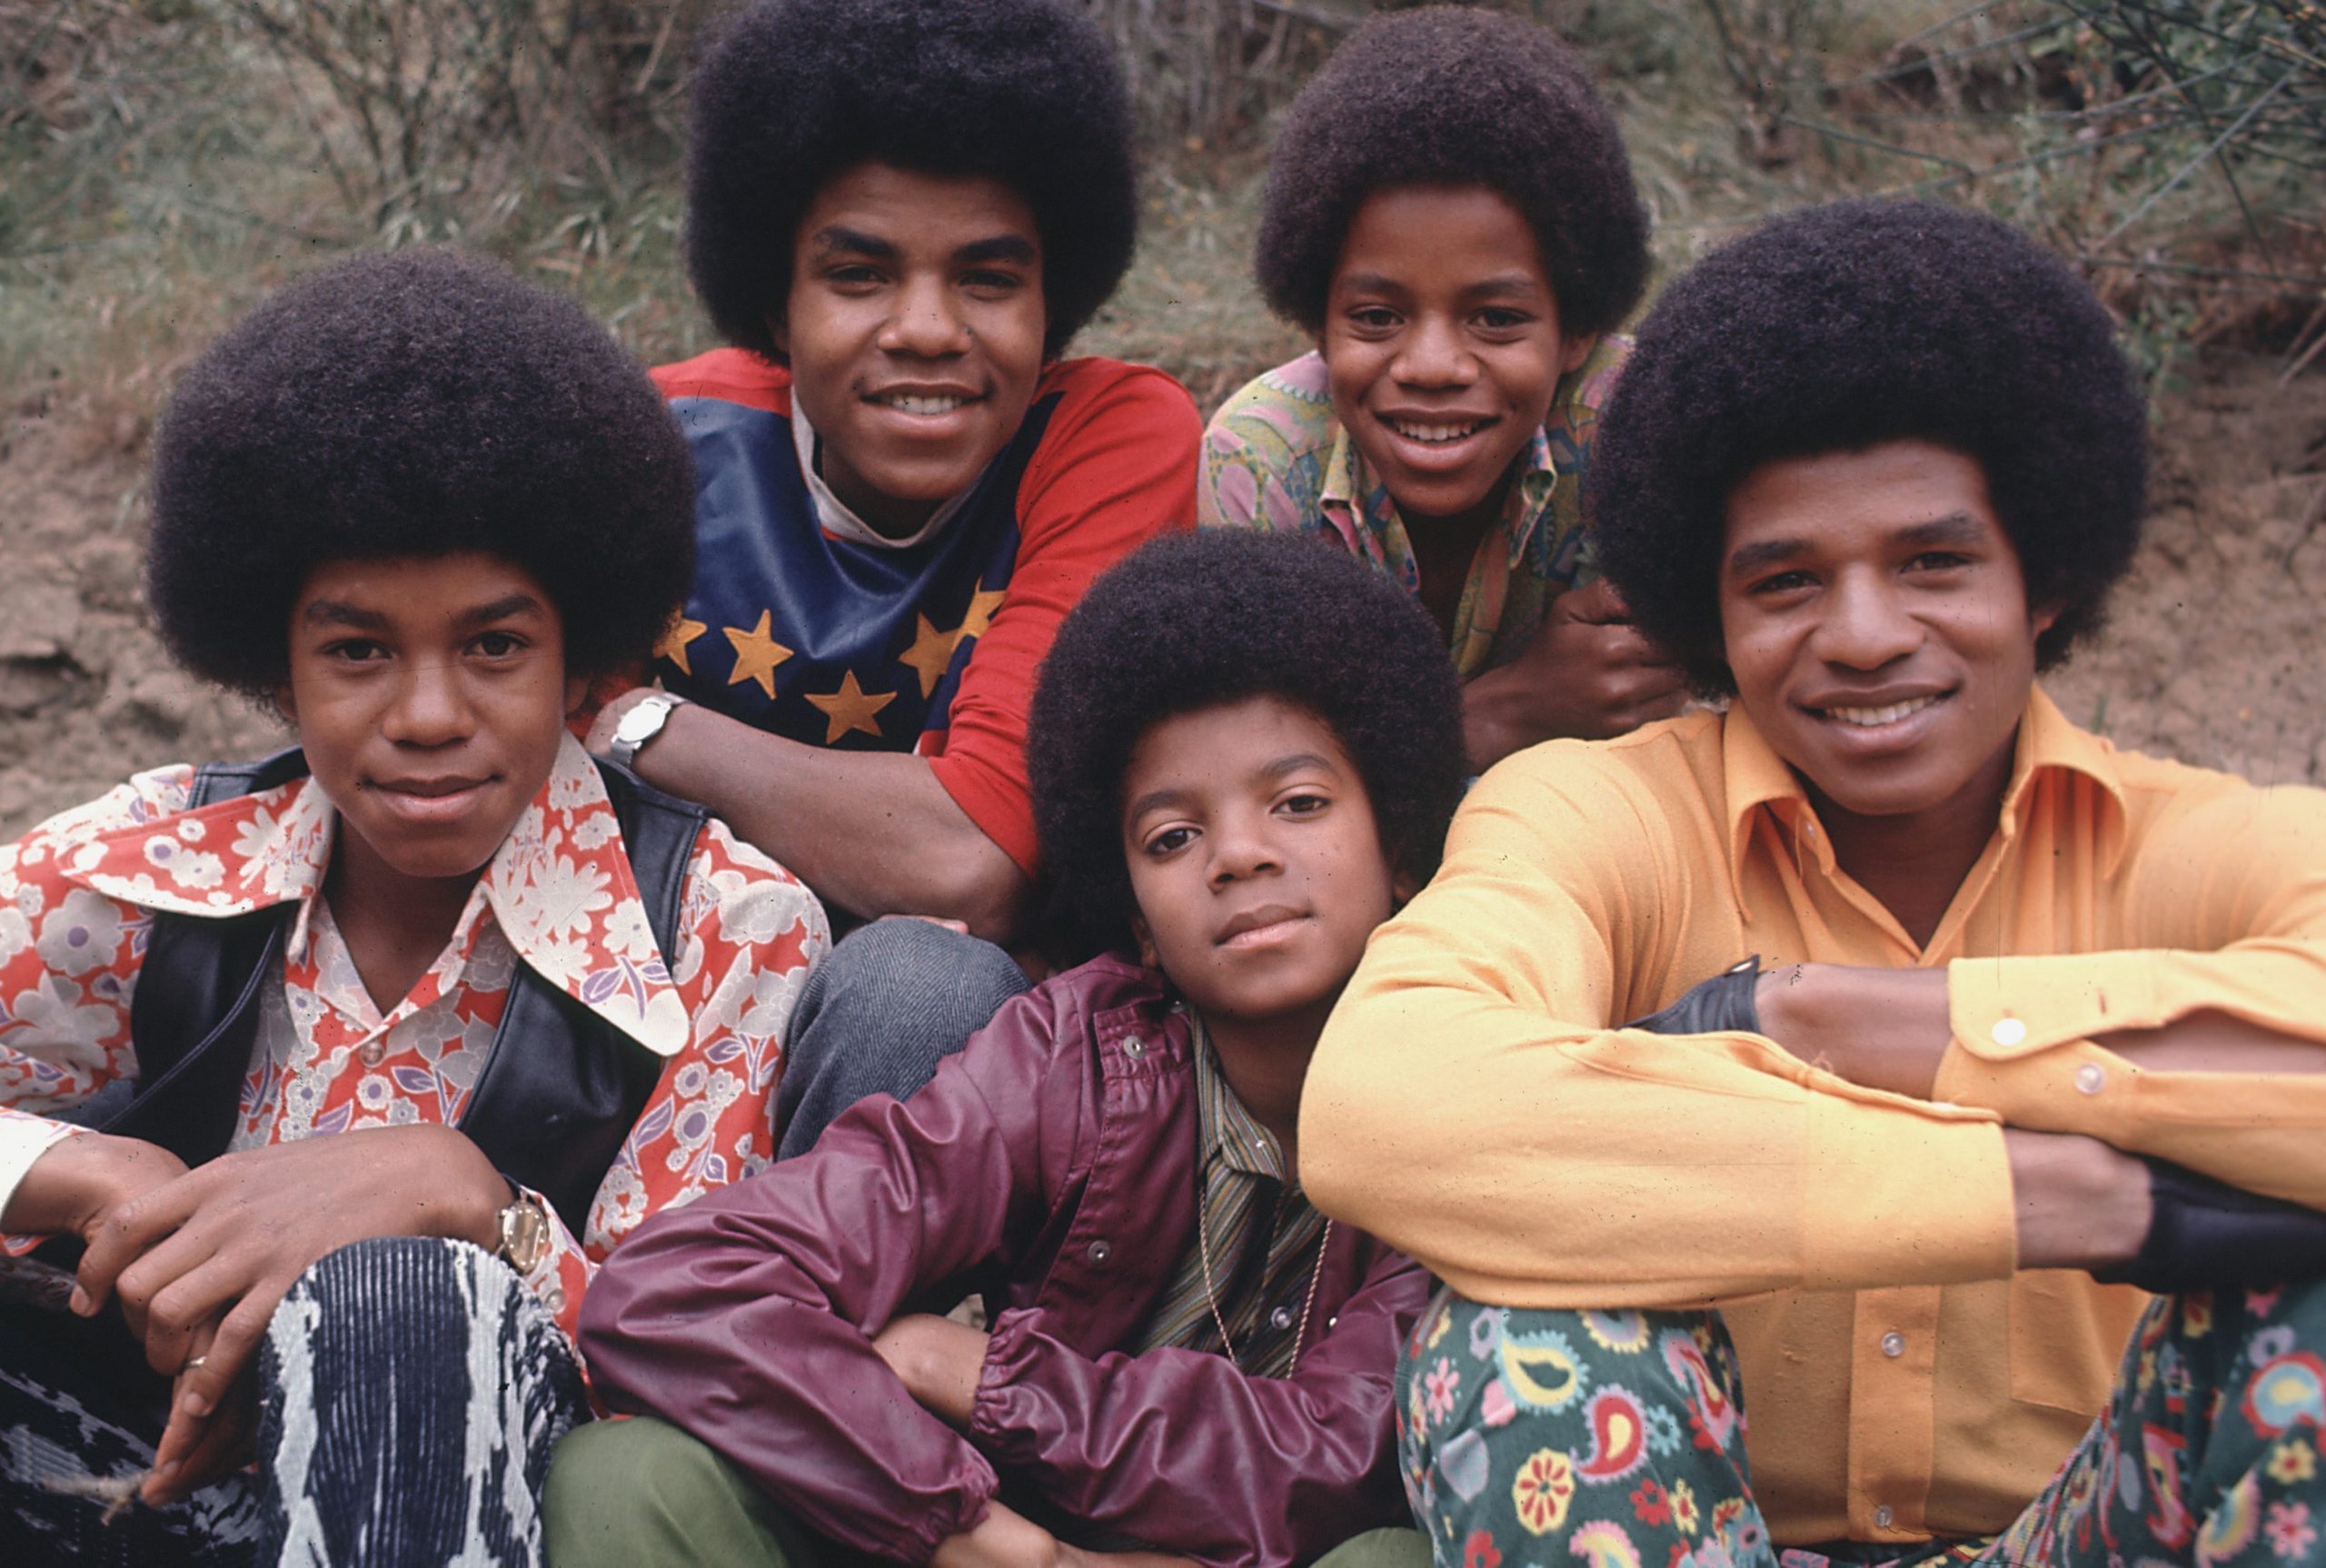 Jackson 5 - Michael Jackson Photo (12701962) - Fanpop